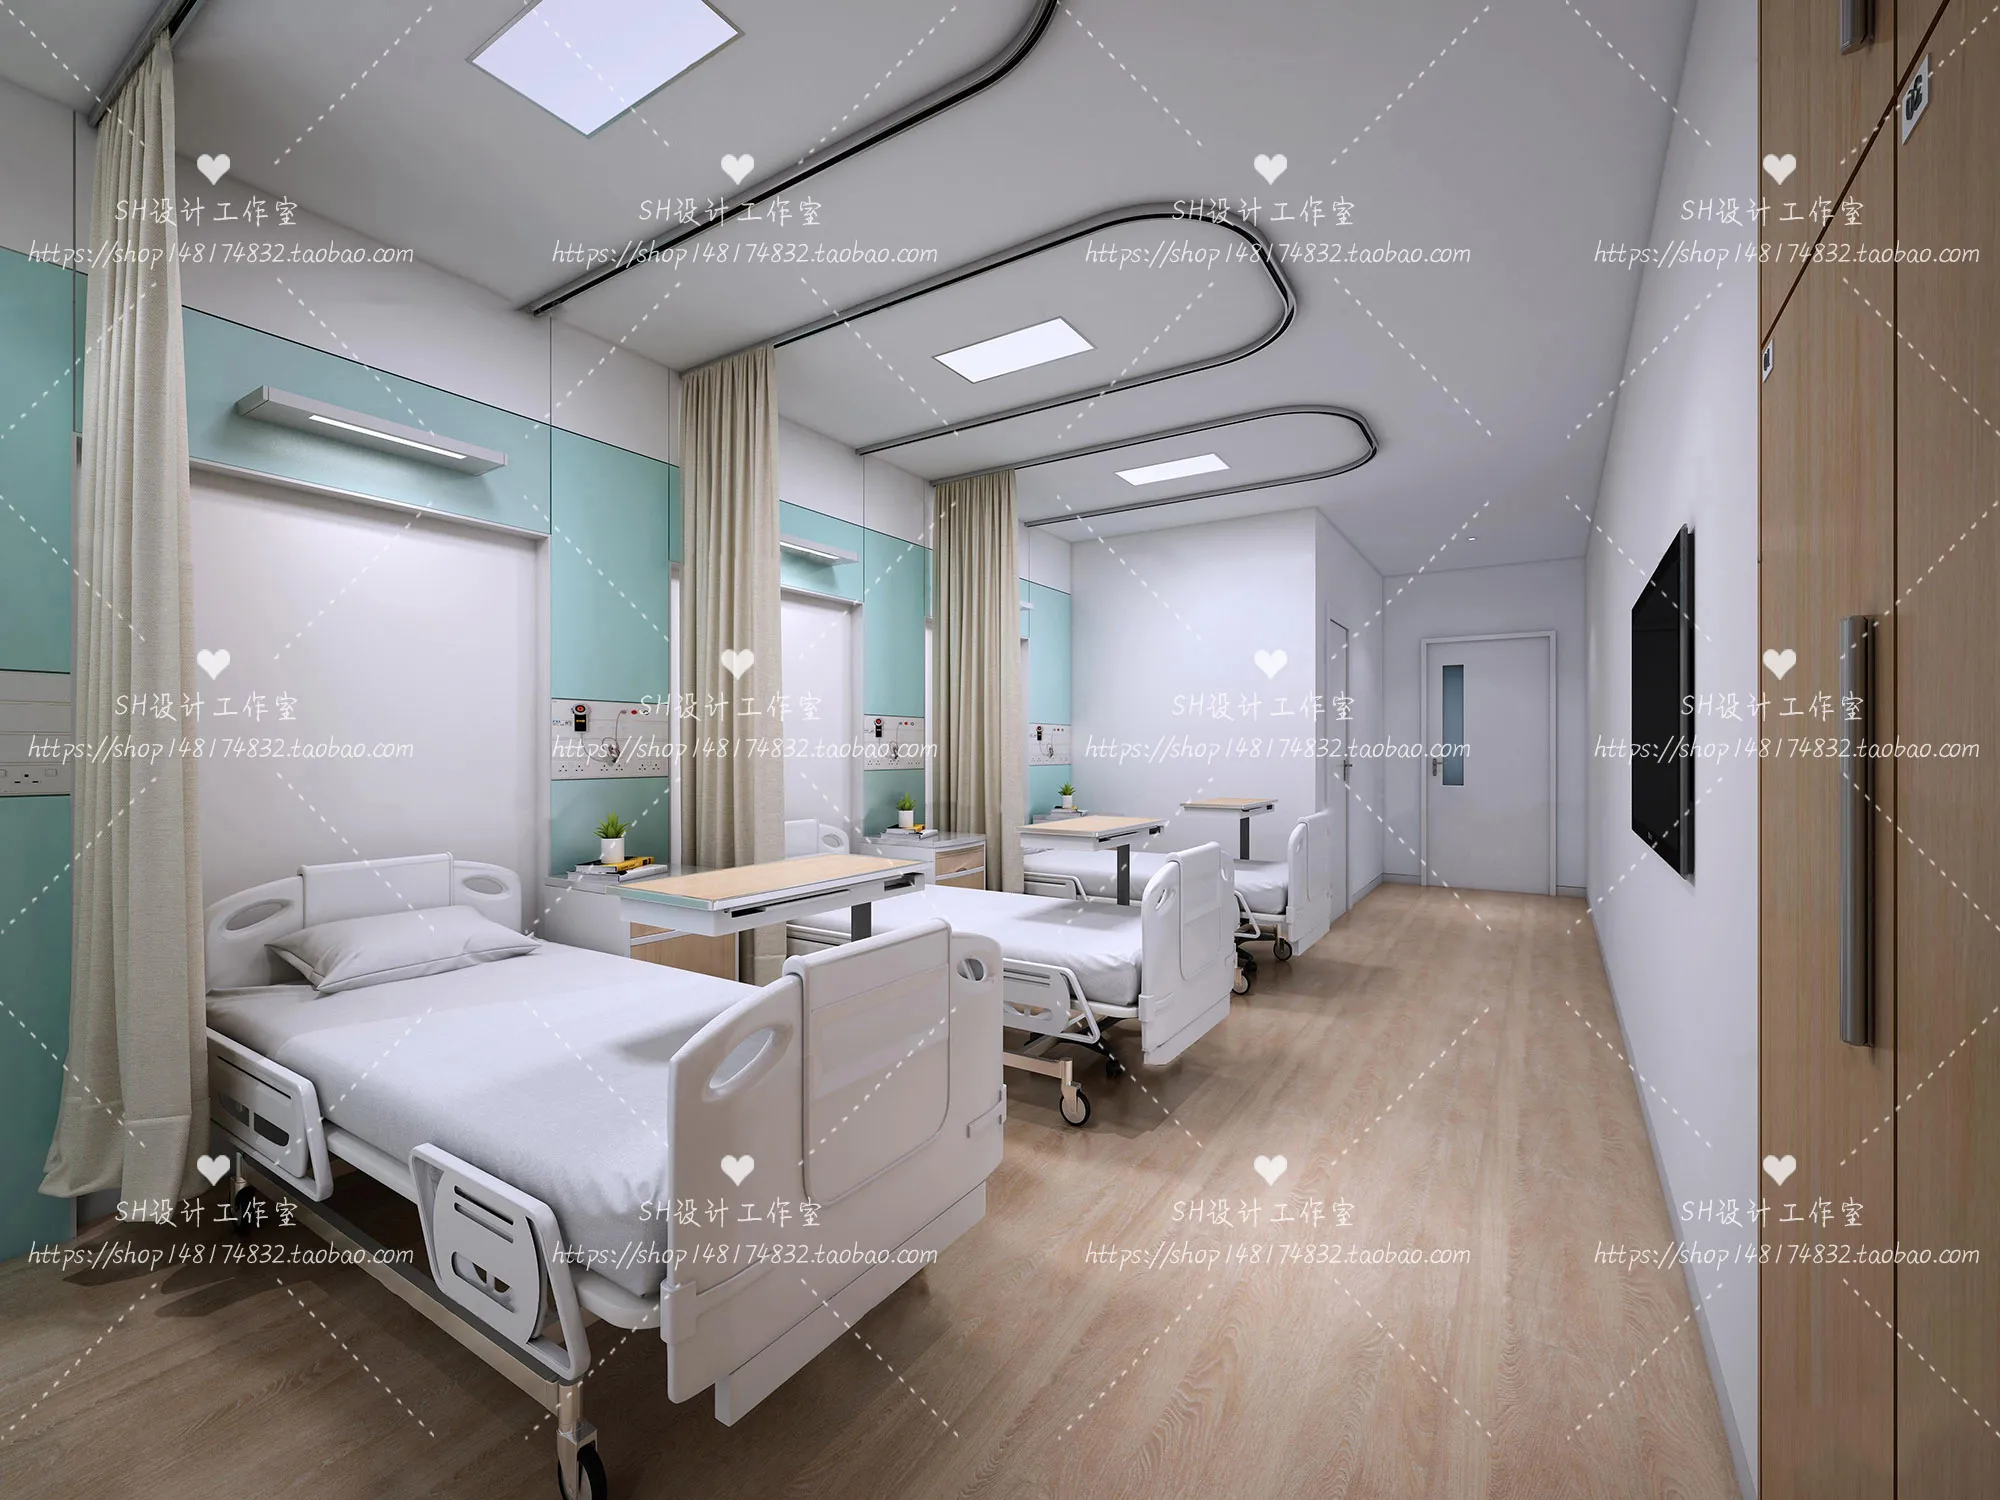 HOSPITAL 3D SCENES – VRAY RENDER – 013